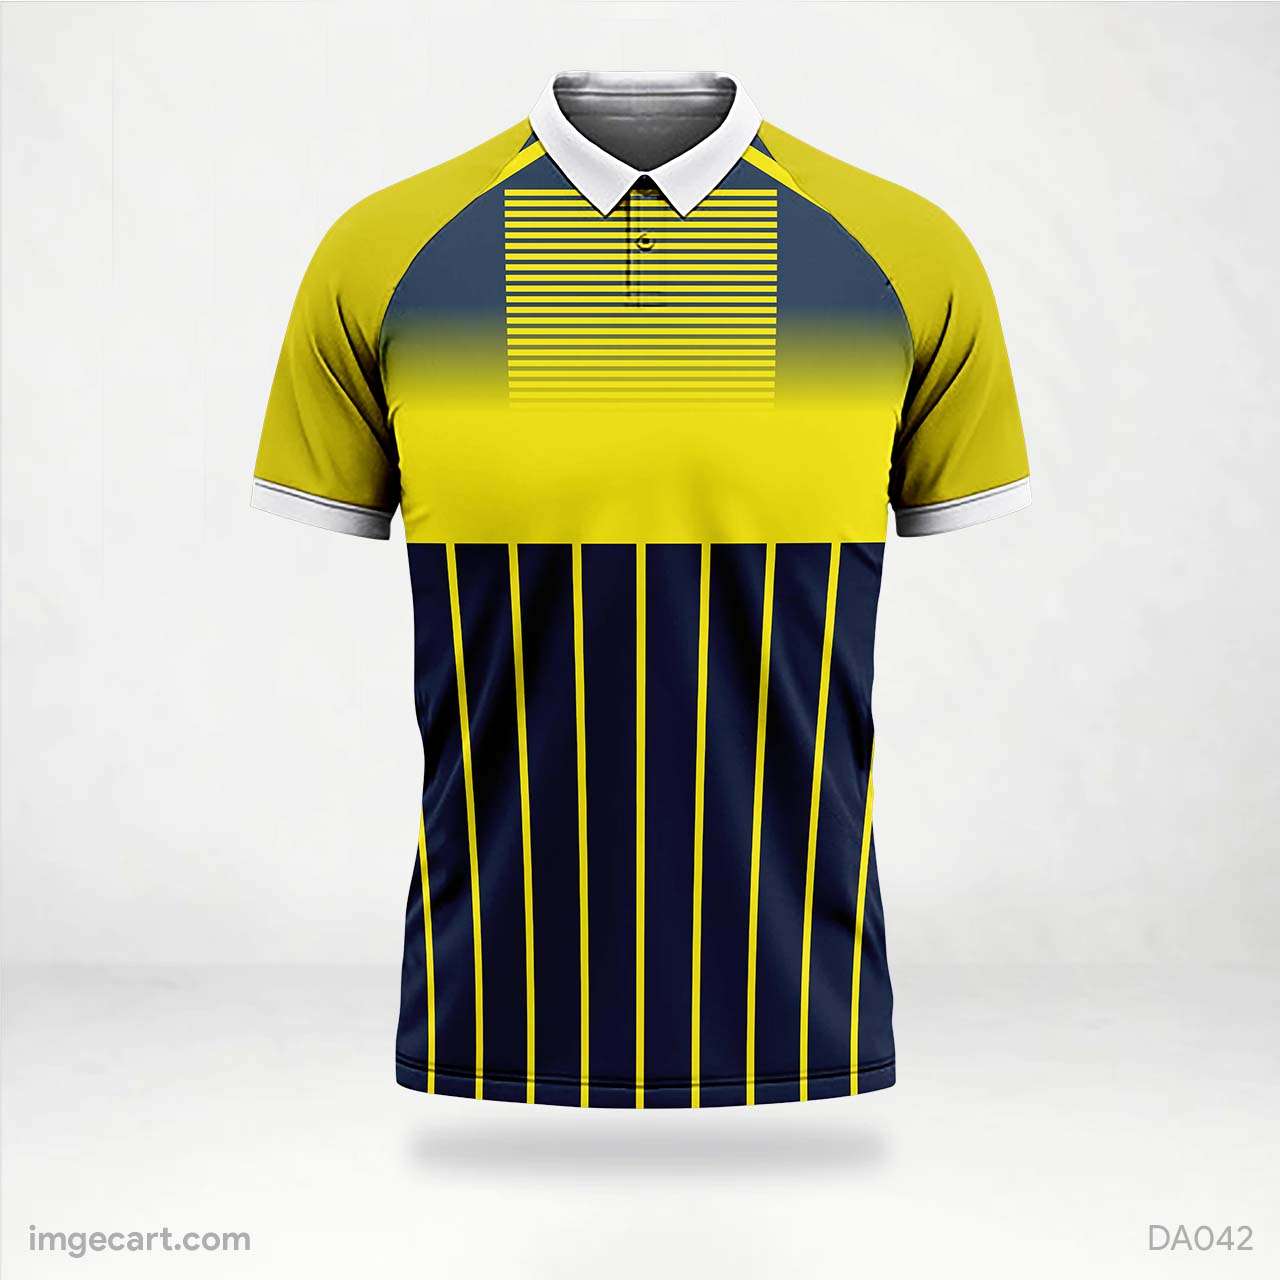 Football Jersey design Yellow with Black Line effect - imgecart